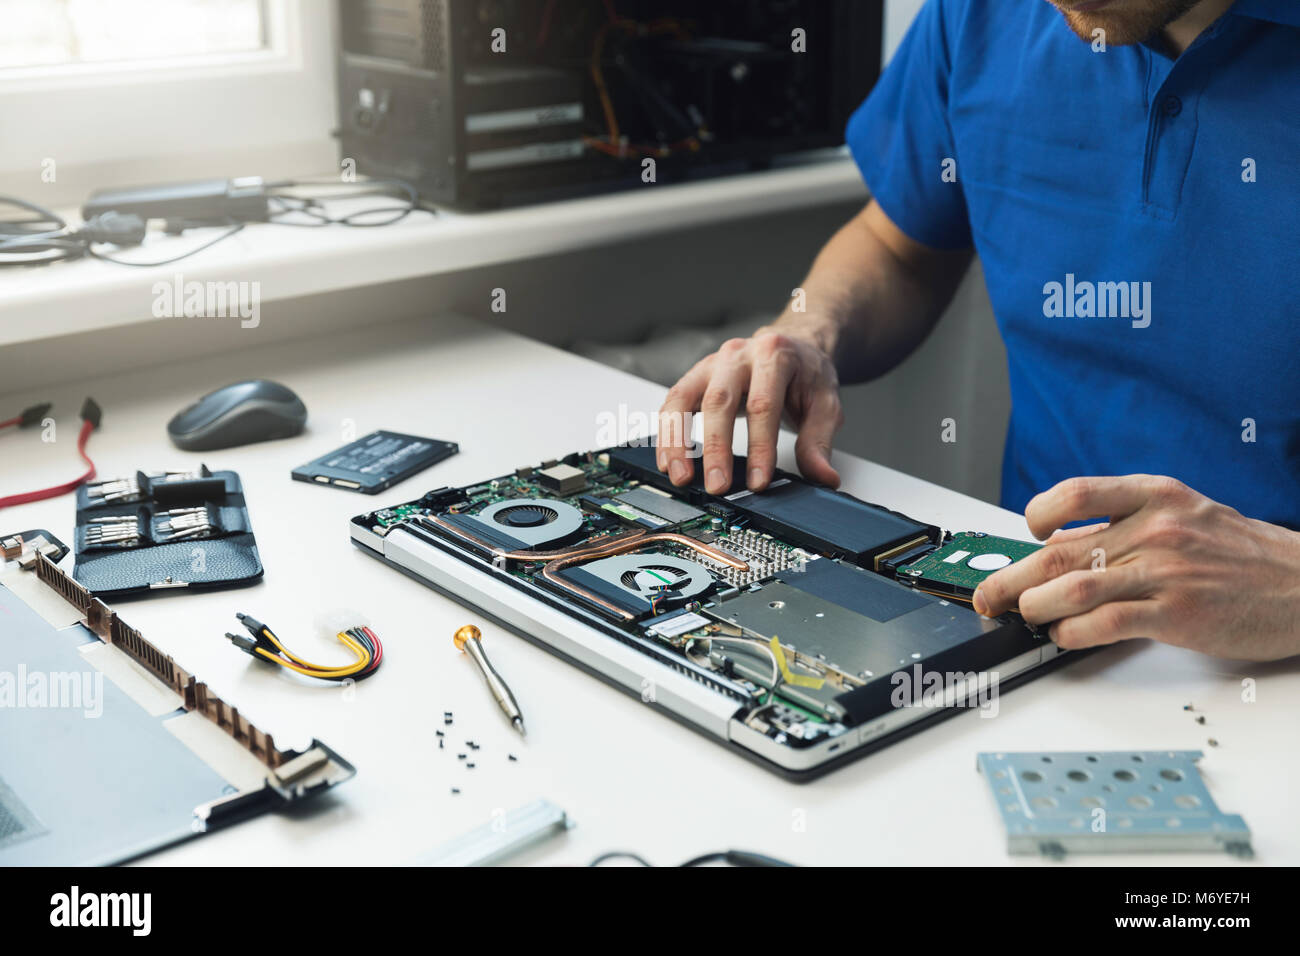 computer repairman installing new hard disk drive in laptop Stock Photo